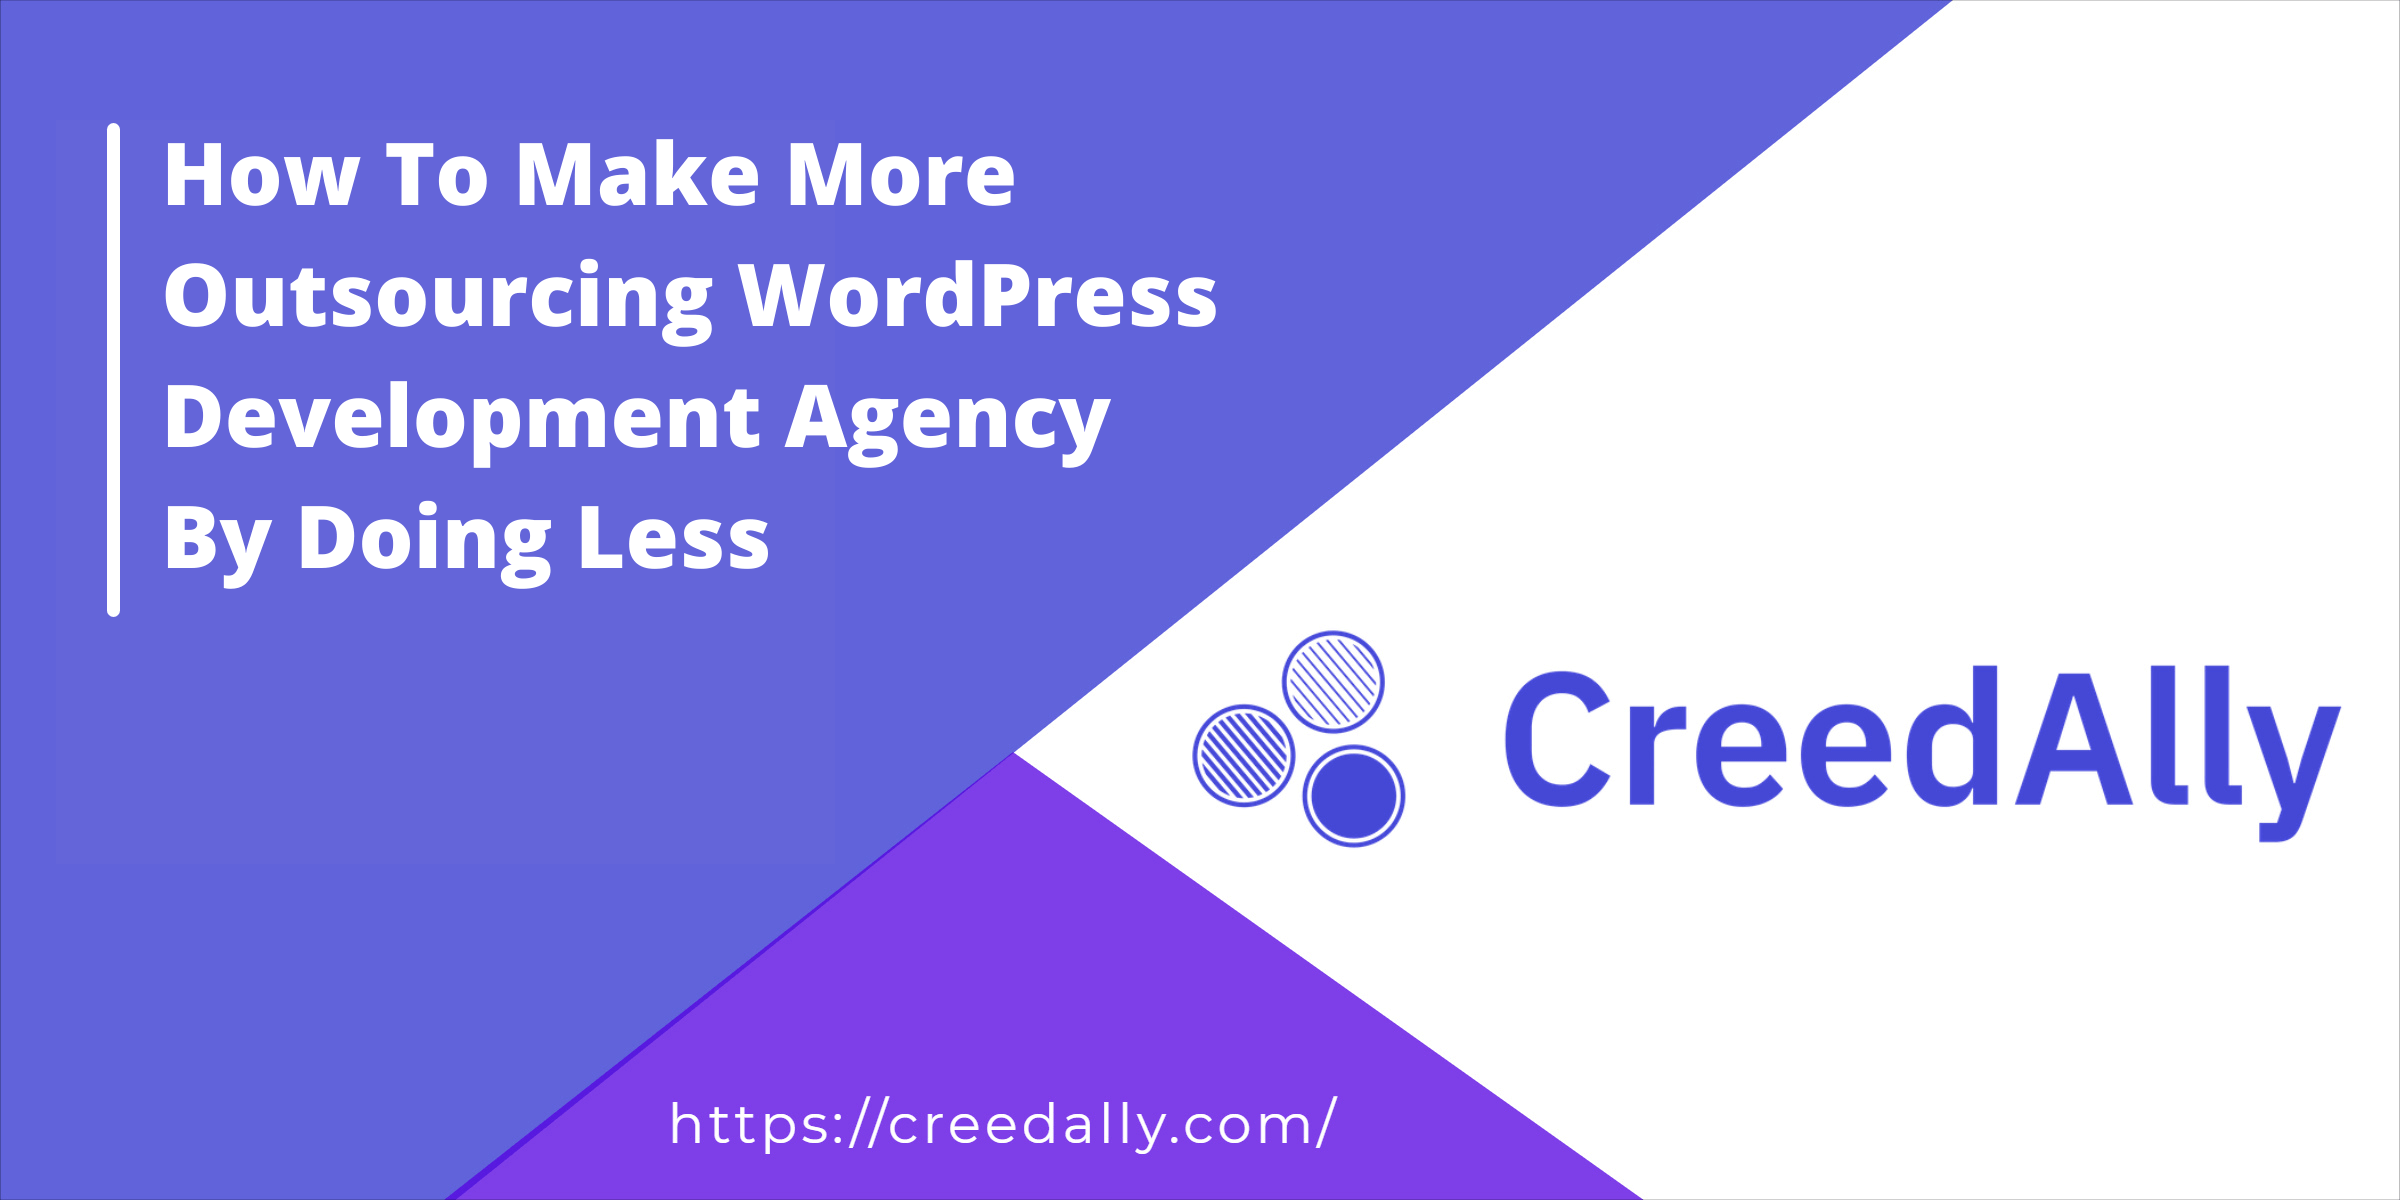 WordPressDevlopment Agency